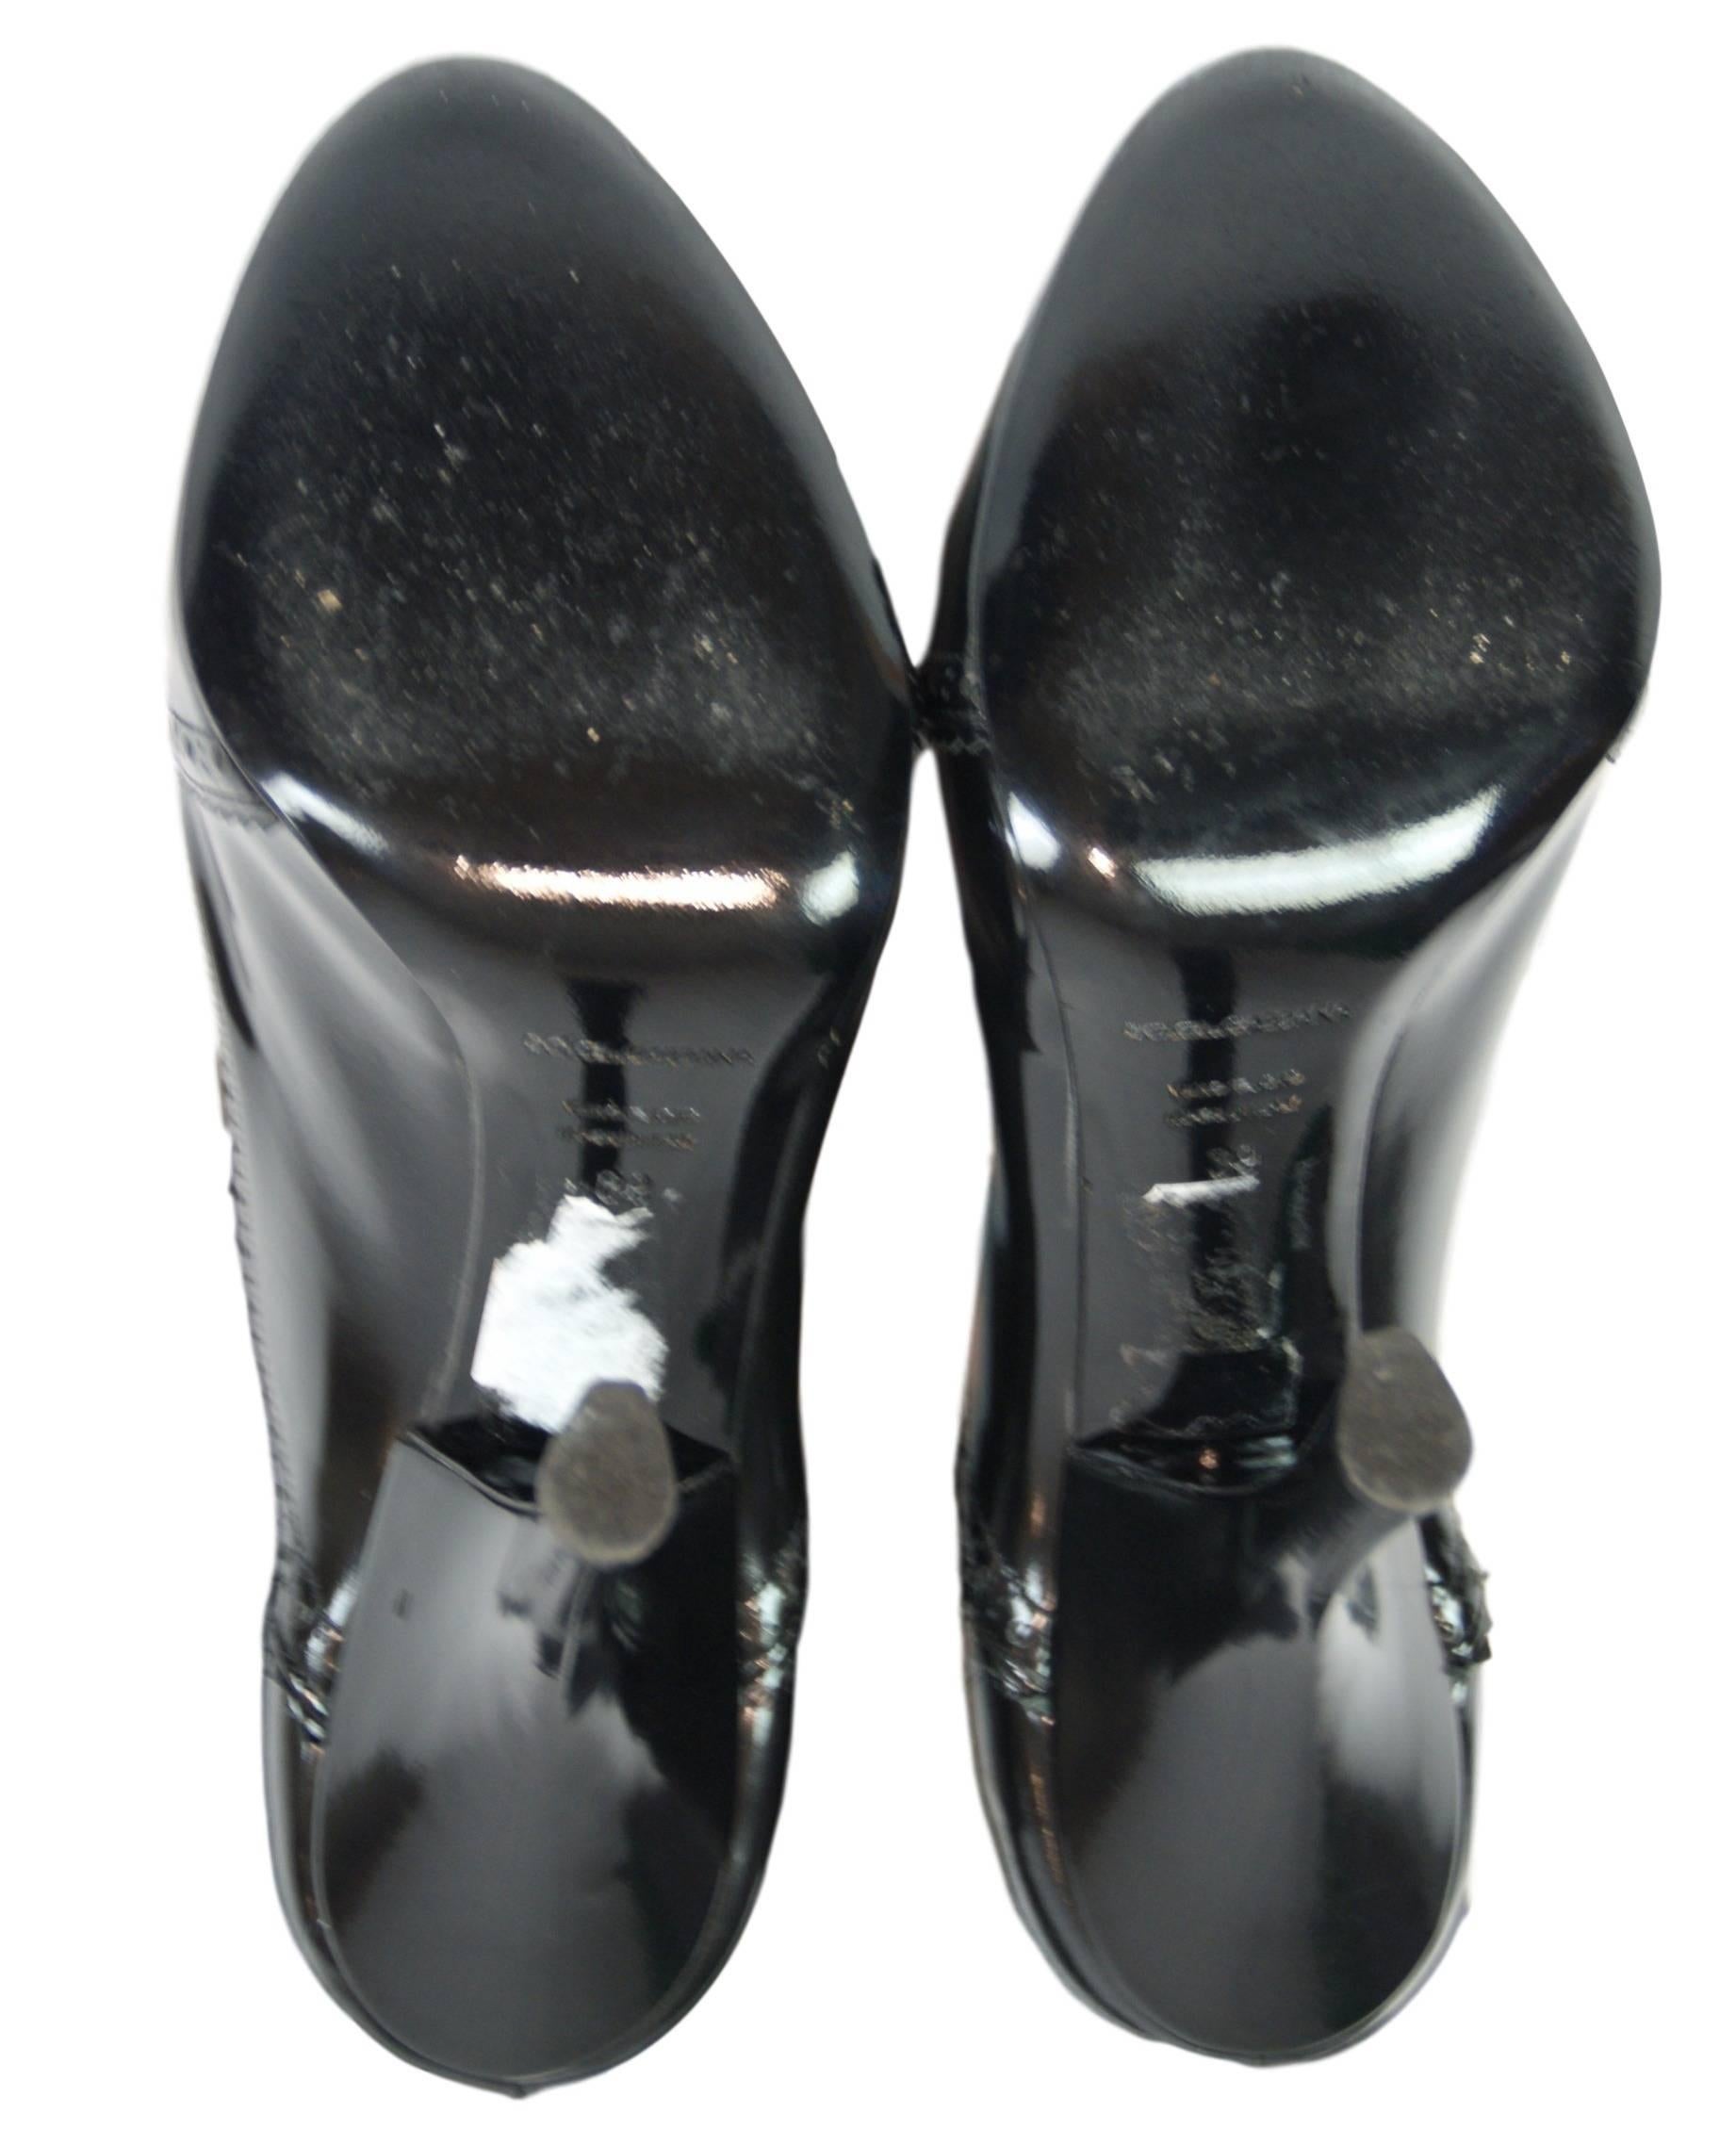 F/W 2012 Dolce & Gabbana Thigh High Black Corset Boots 39 Worn by Halsey  3